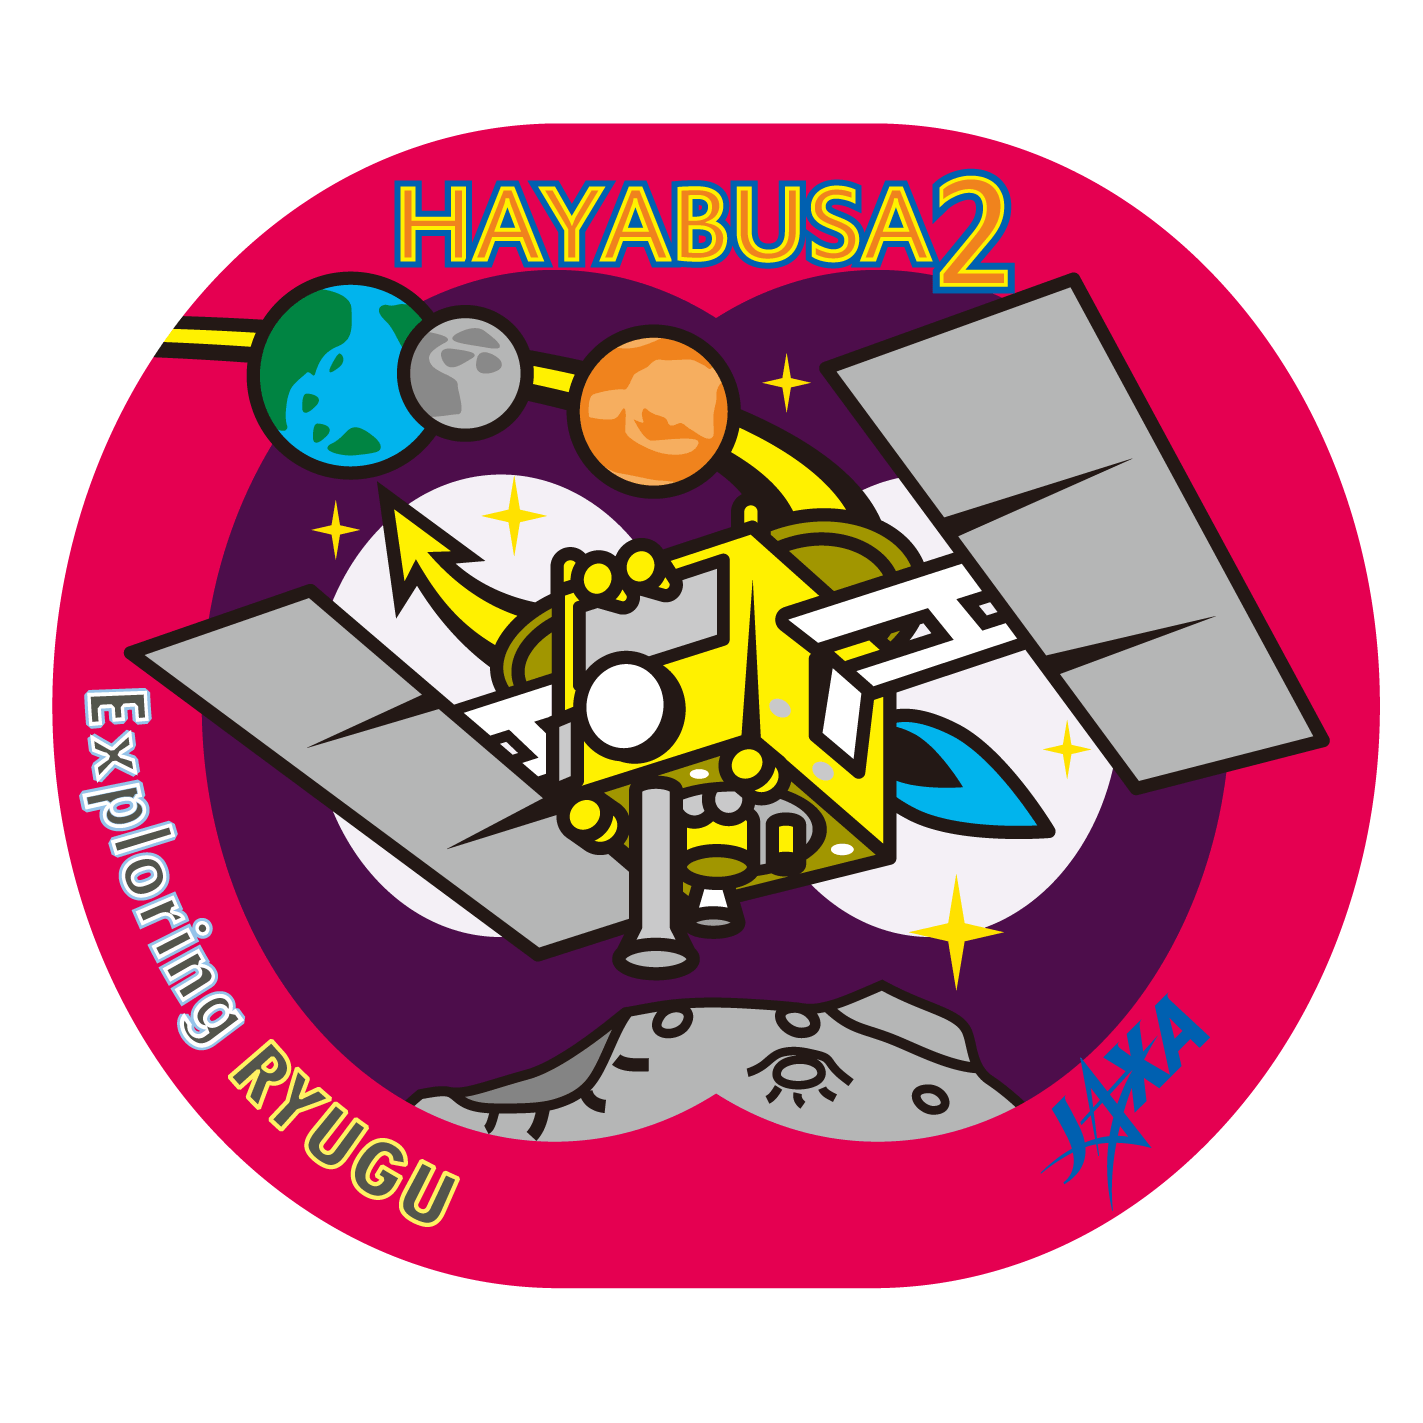 Jaxa Logo - Arrival at Ryugu! | Topics | JAXA Hayabusa2 project